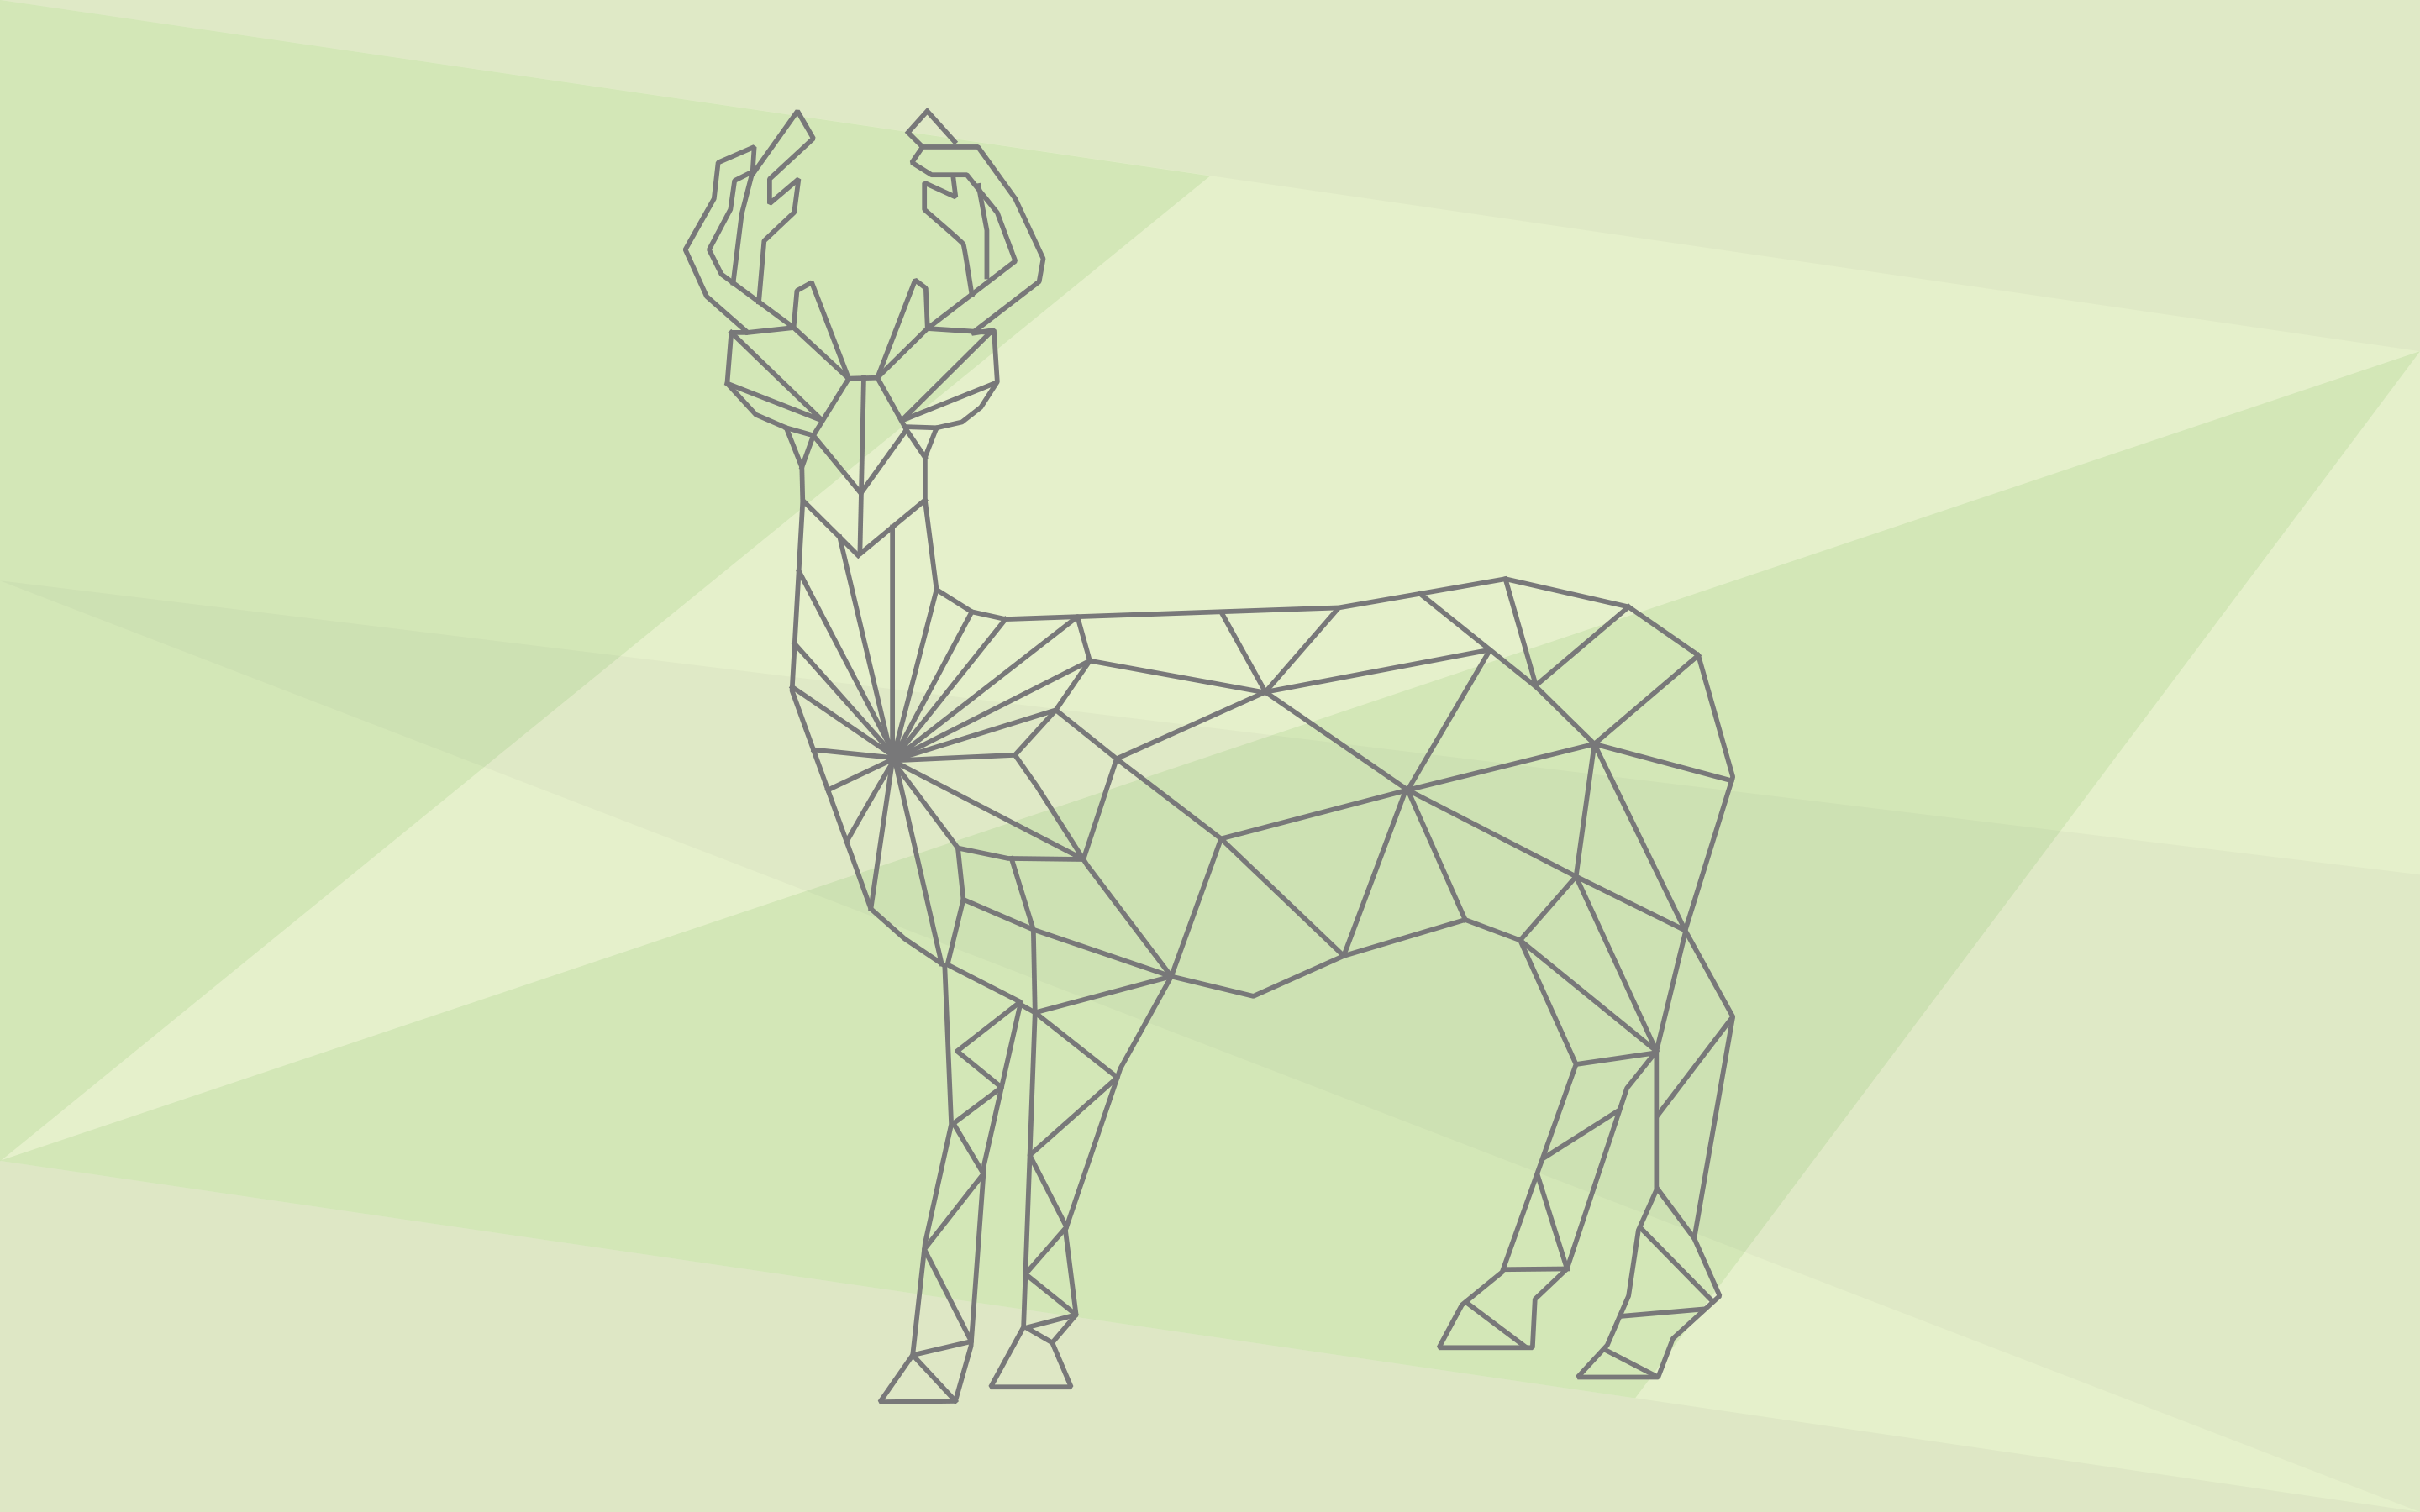 General 2880x1800 deer animals lines simple background digital art mammals abstract